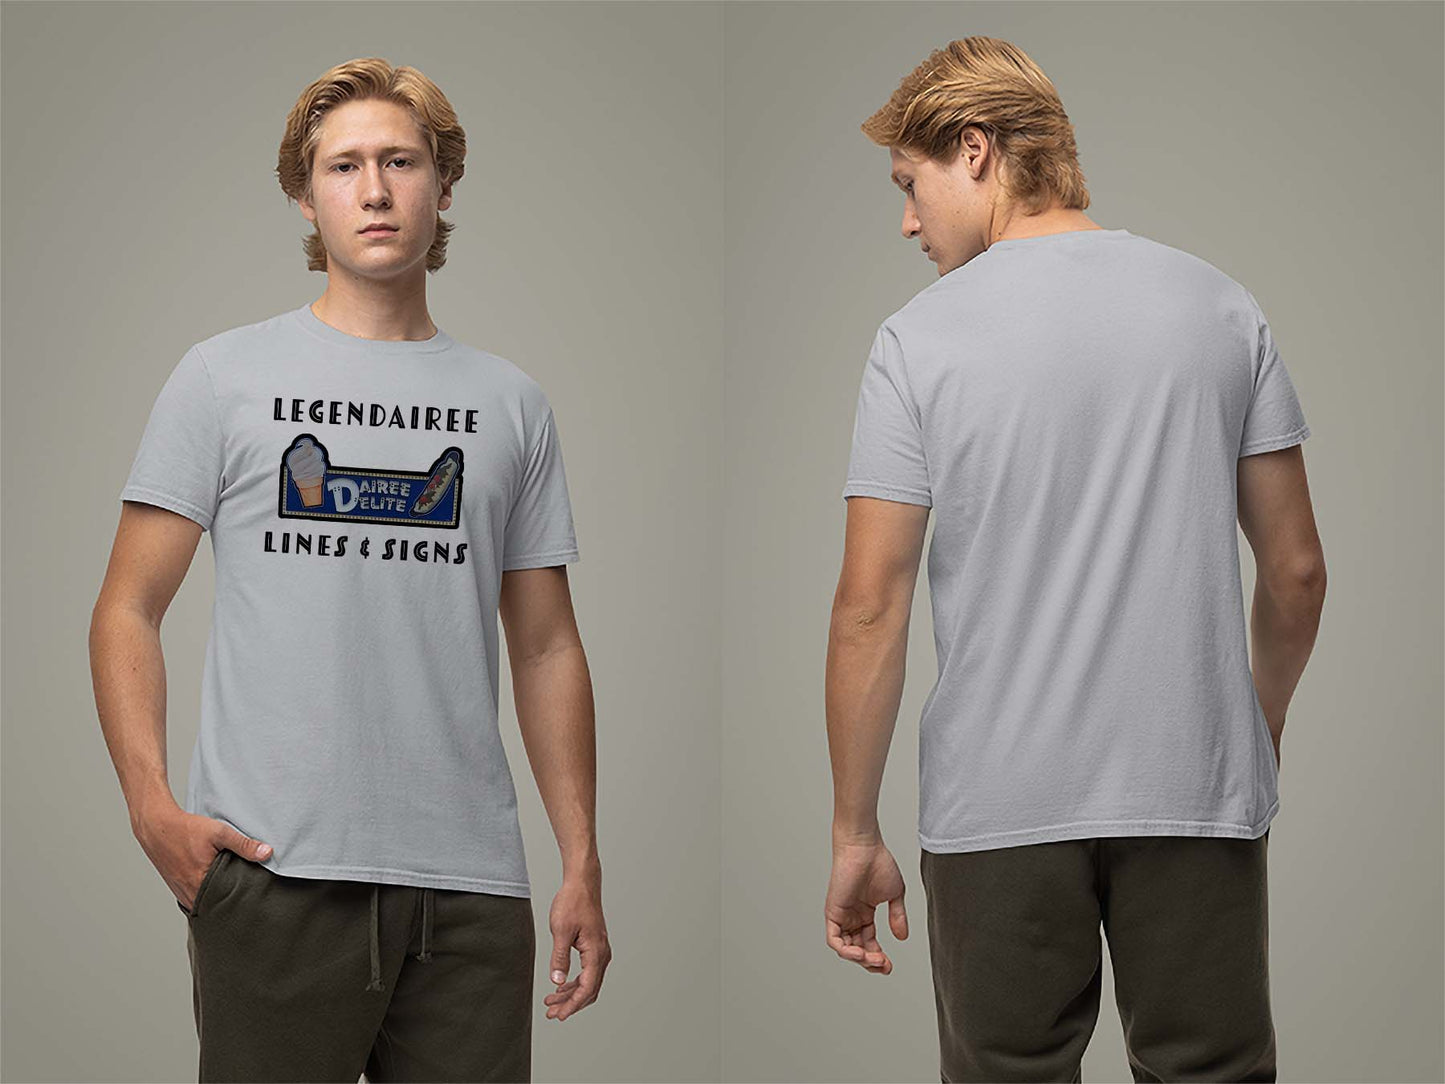 Legendairee T-Shirt Small Sport Grey